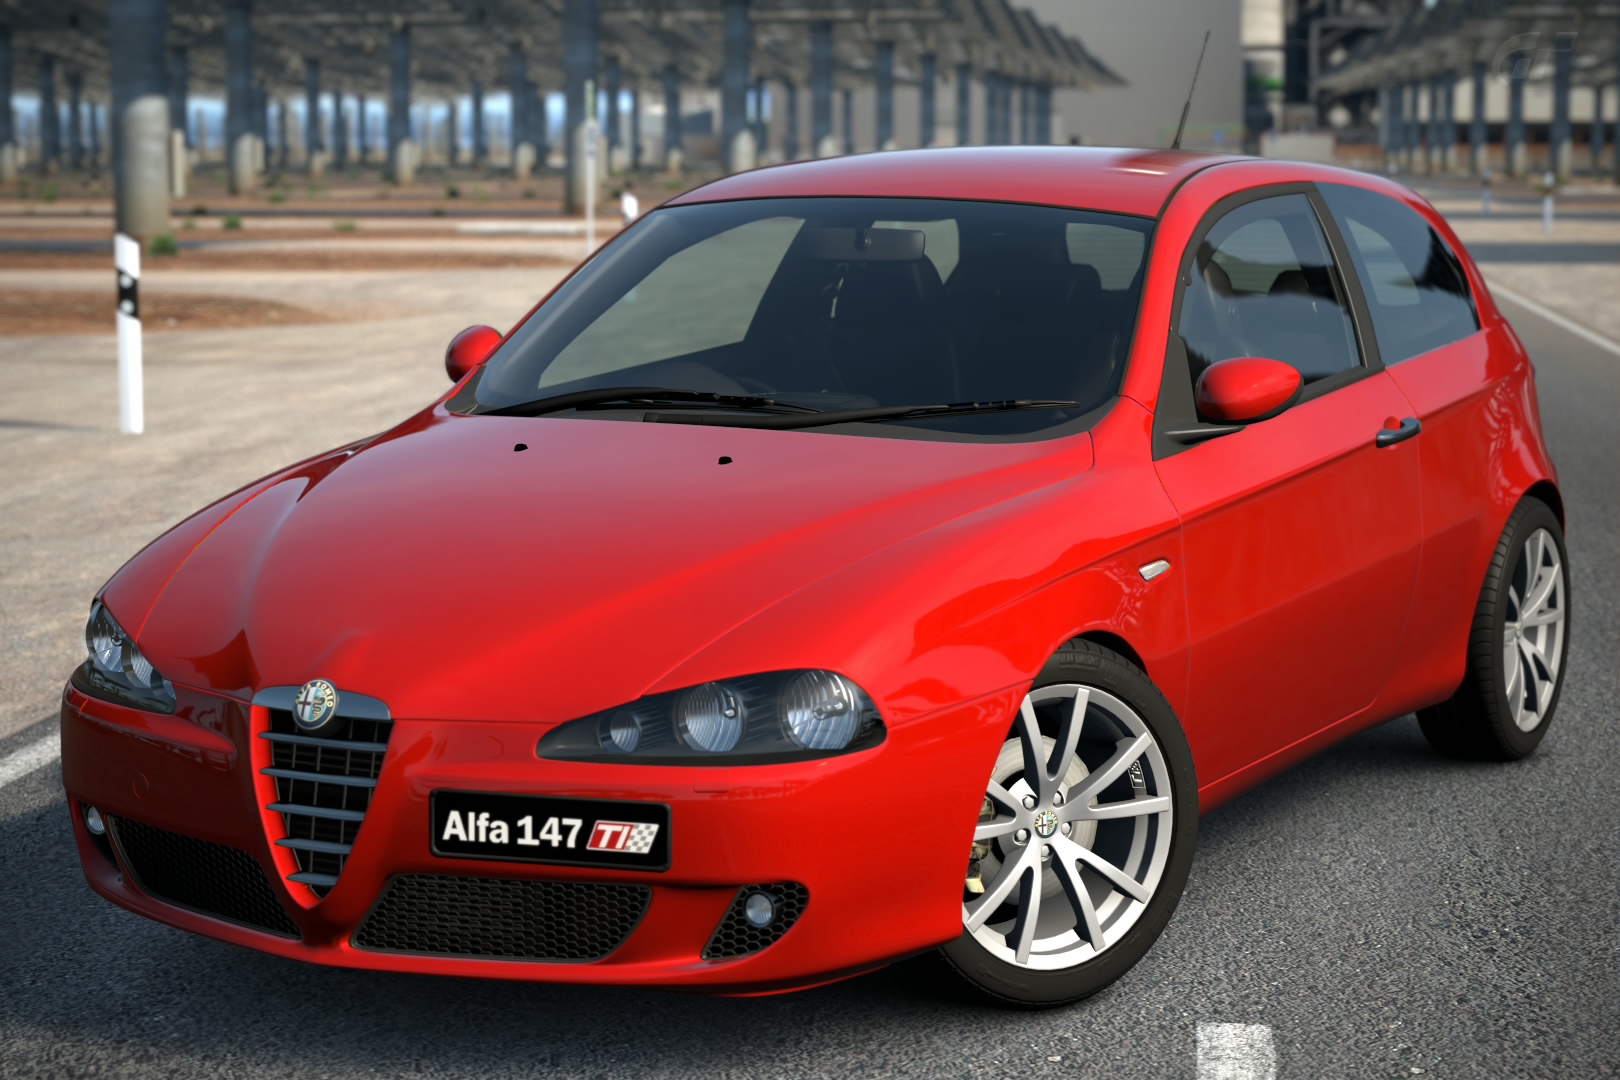 Alfa Romeo 147 Ti 2 0 Twin Spark 06 Gran Turismo Wiki Fandom